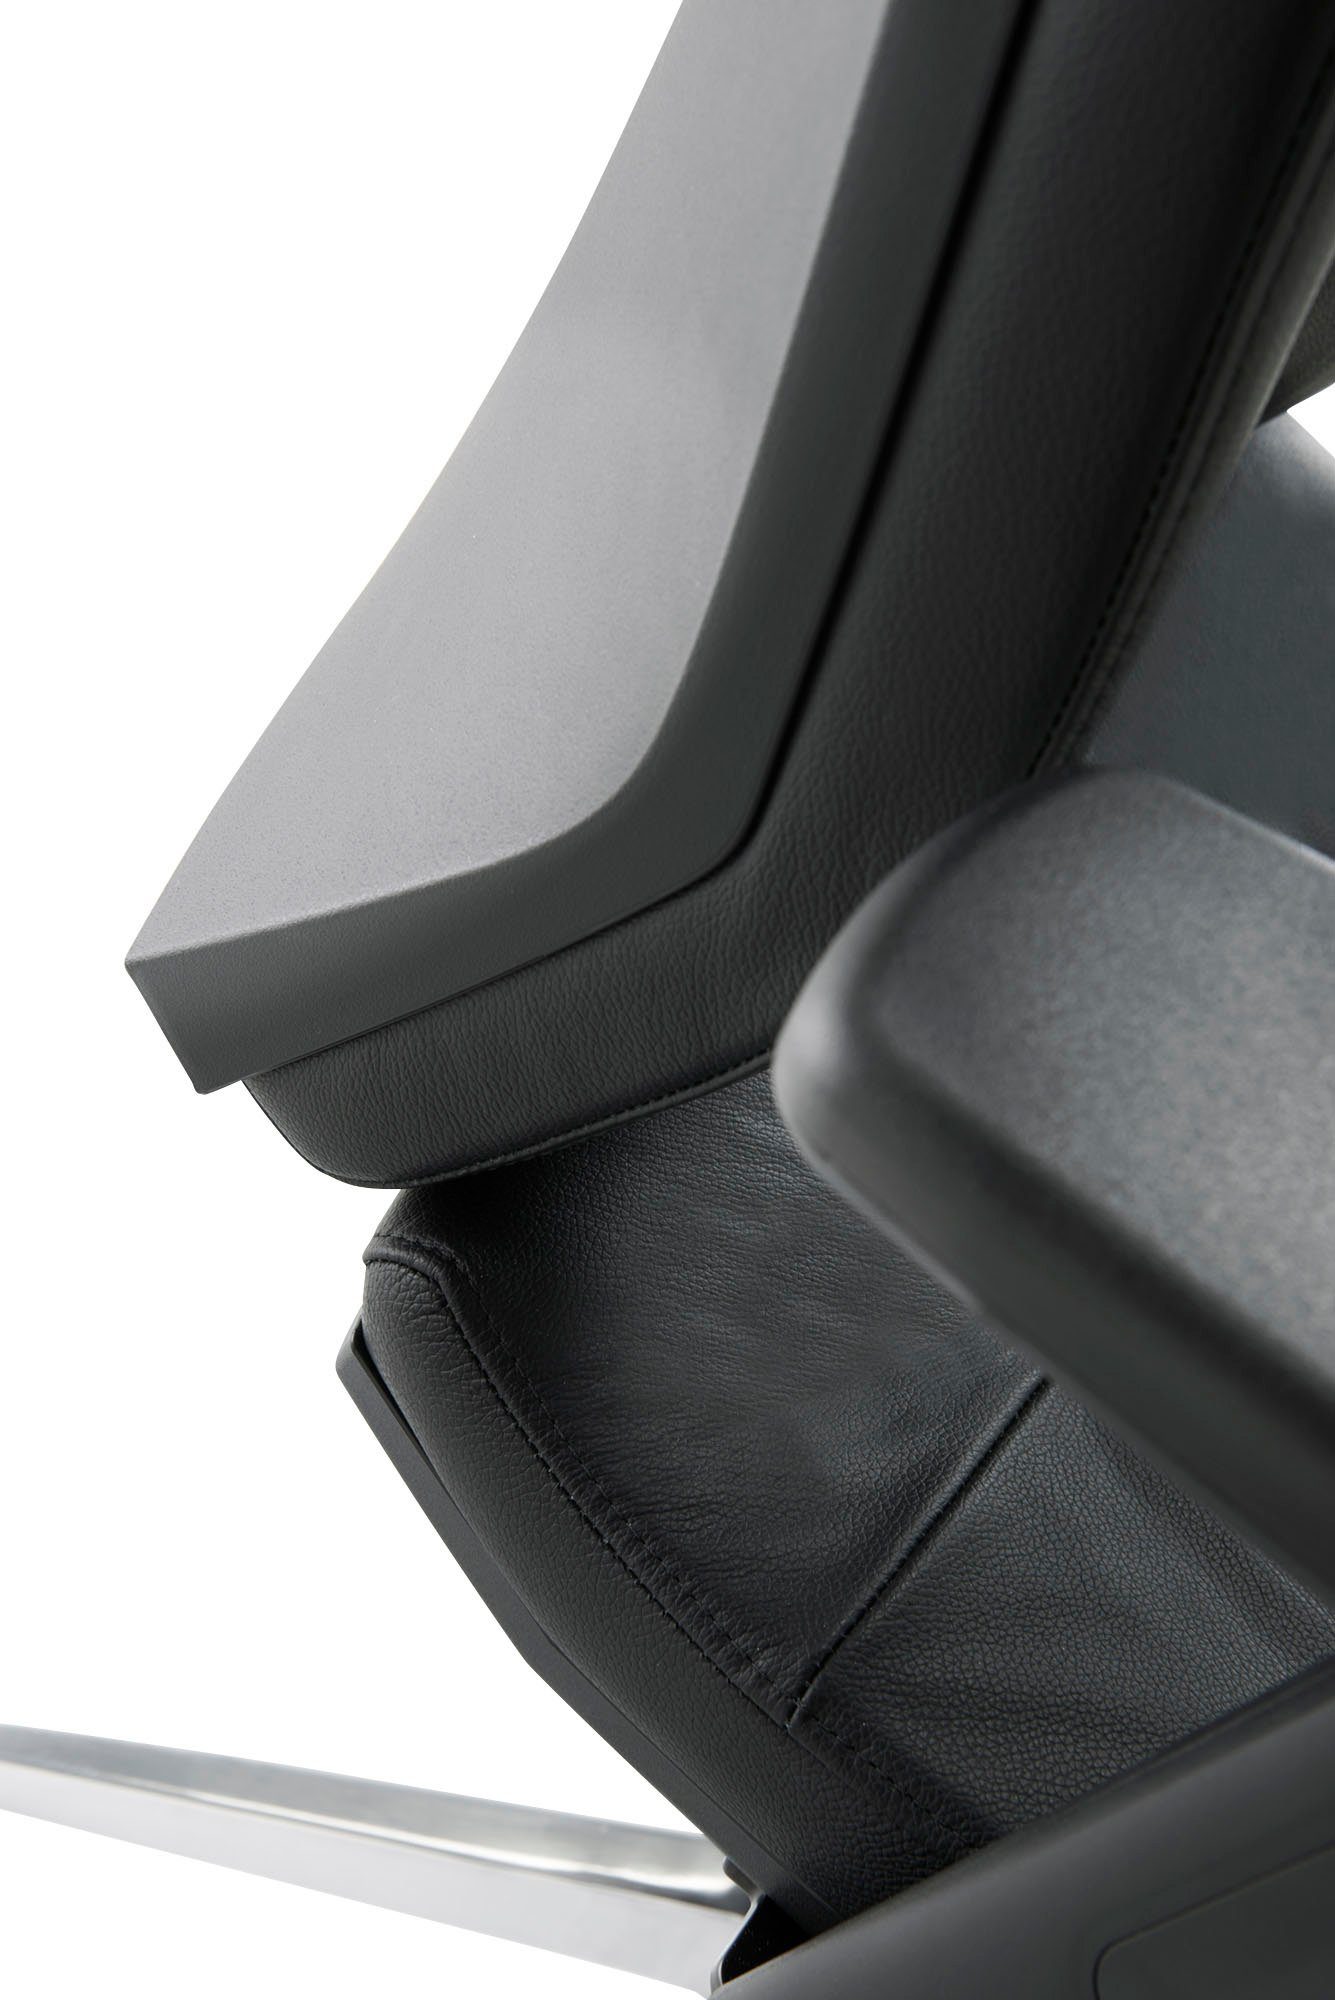 Mayer Sitzmöbel Chefsessel Drehstuhl verstellbar, 7-fach verstellbare Kopfstütze myCONTRACT Rückenhöhe LINE